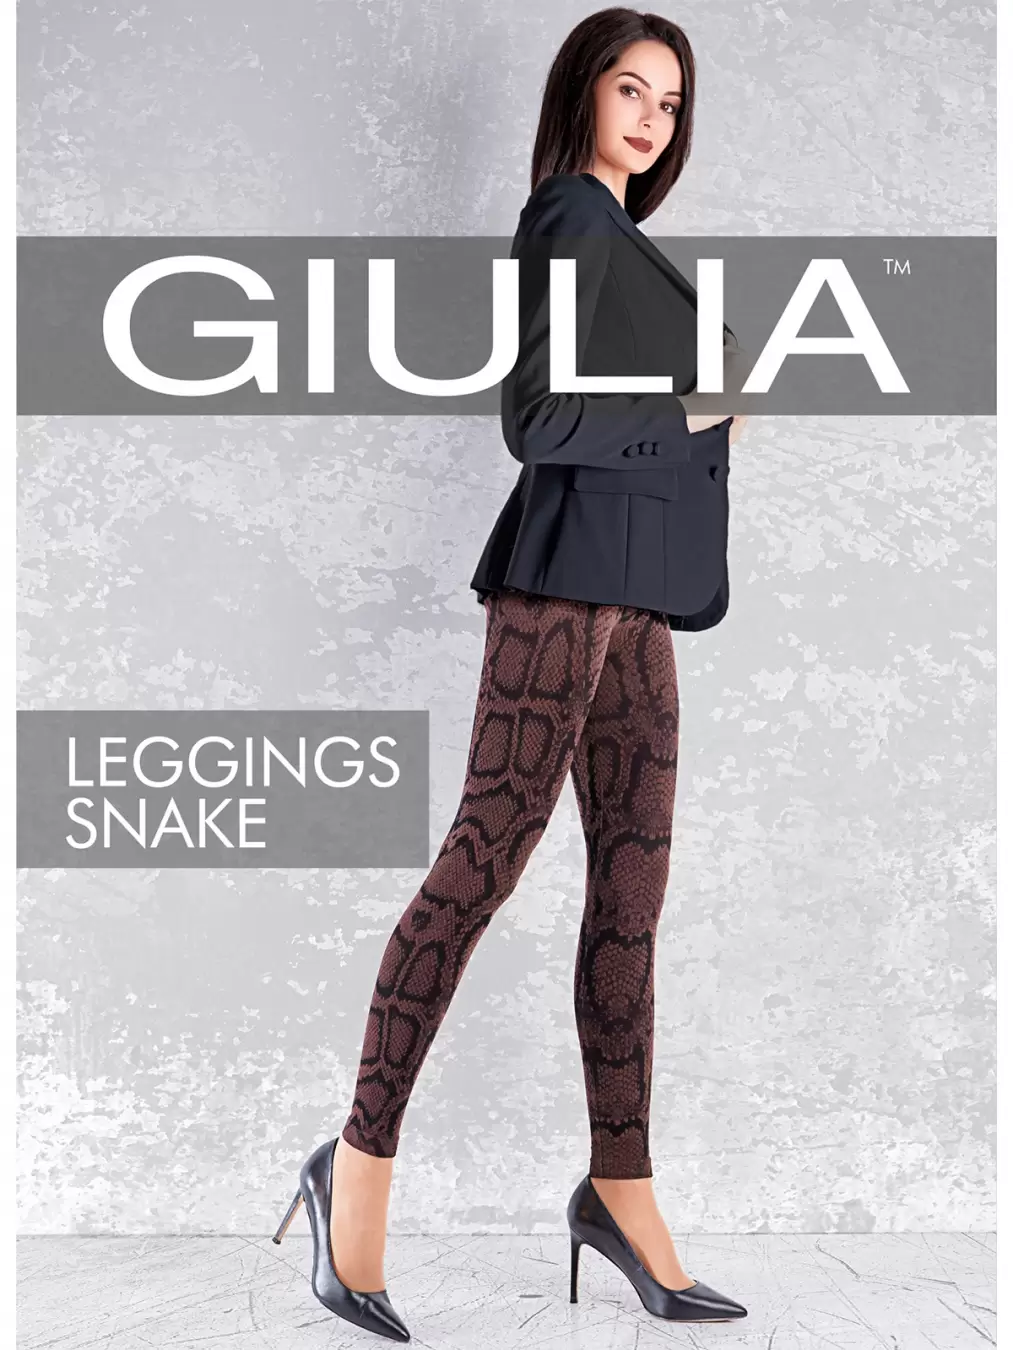 Giulia LEGGINGS SNAKE 01, леггинсы (изображение 1)